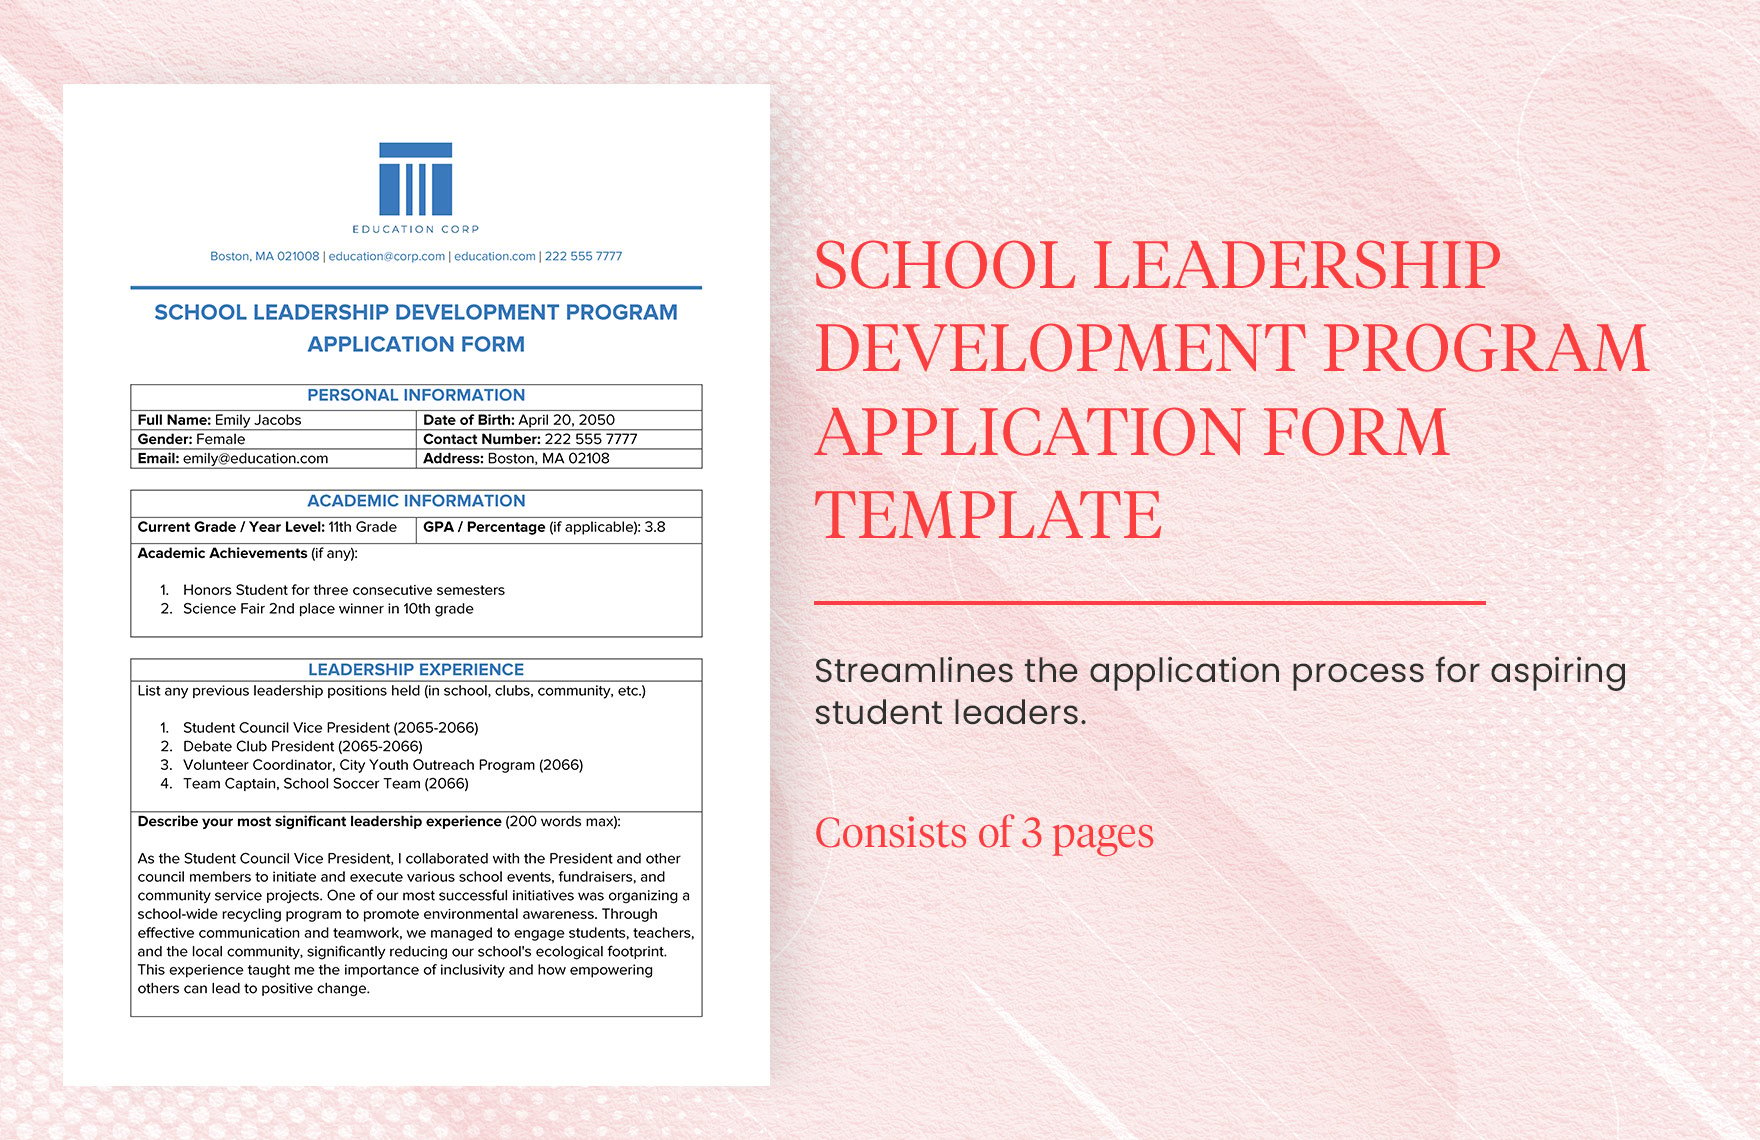 School Leadership Development Program Application Form Template